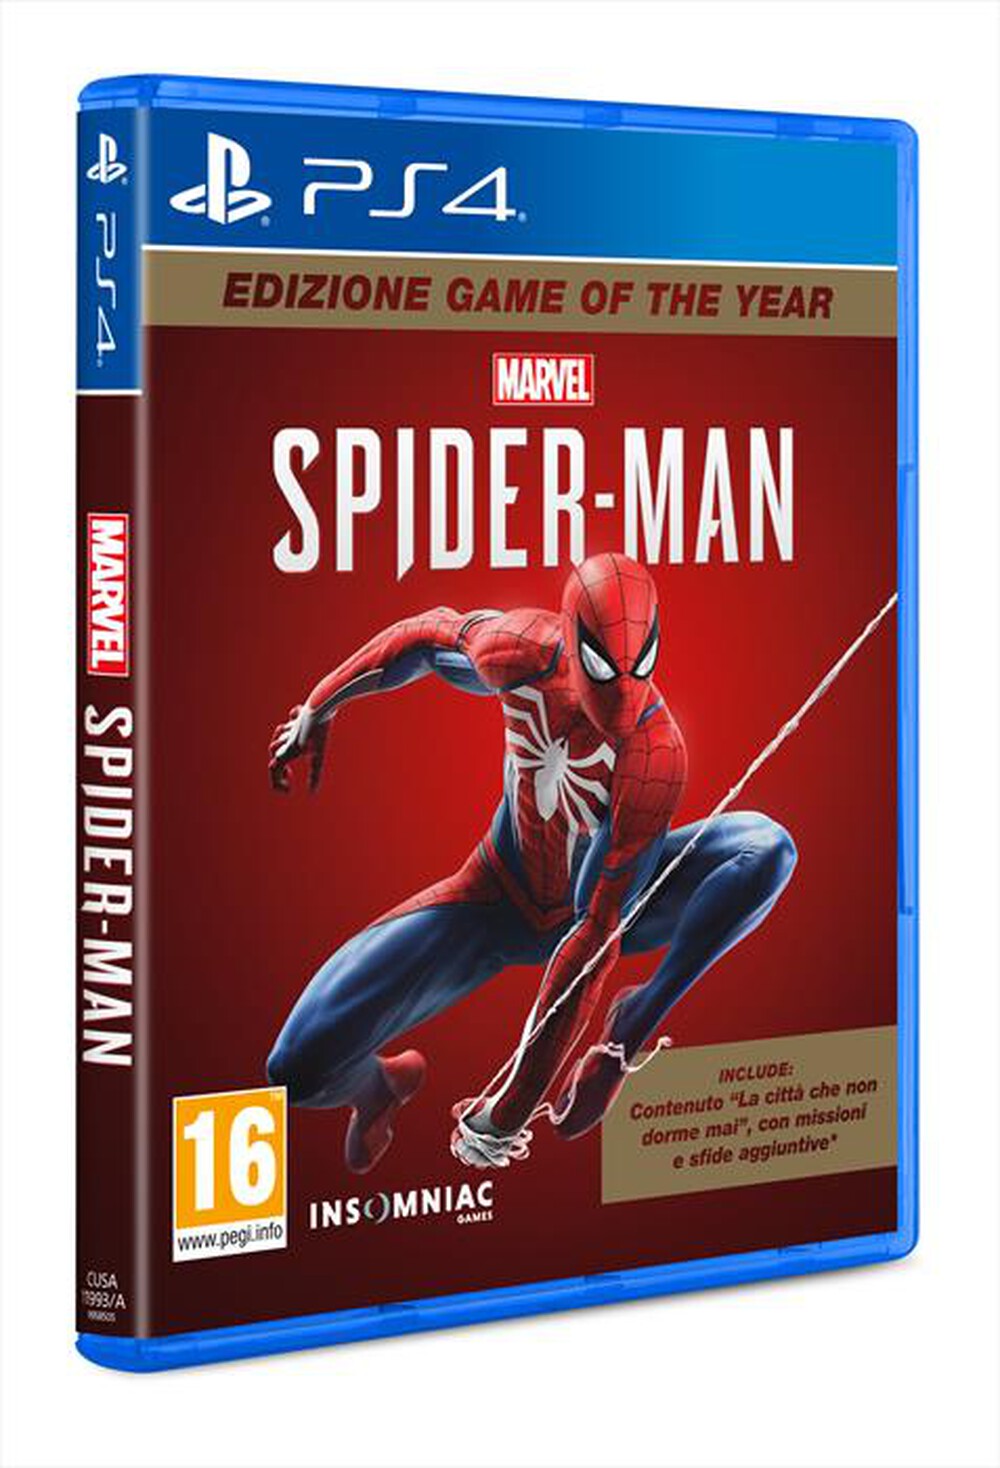 "SONY COMPUTER - Marvel's Spider-Man GOTY PS4"